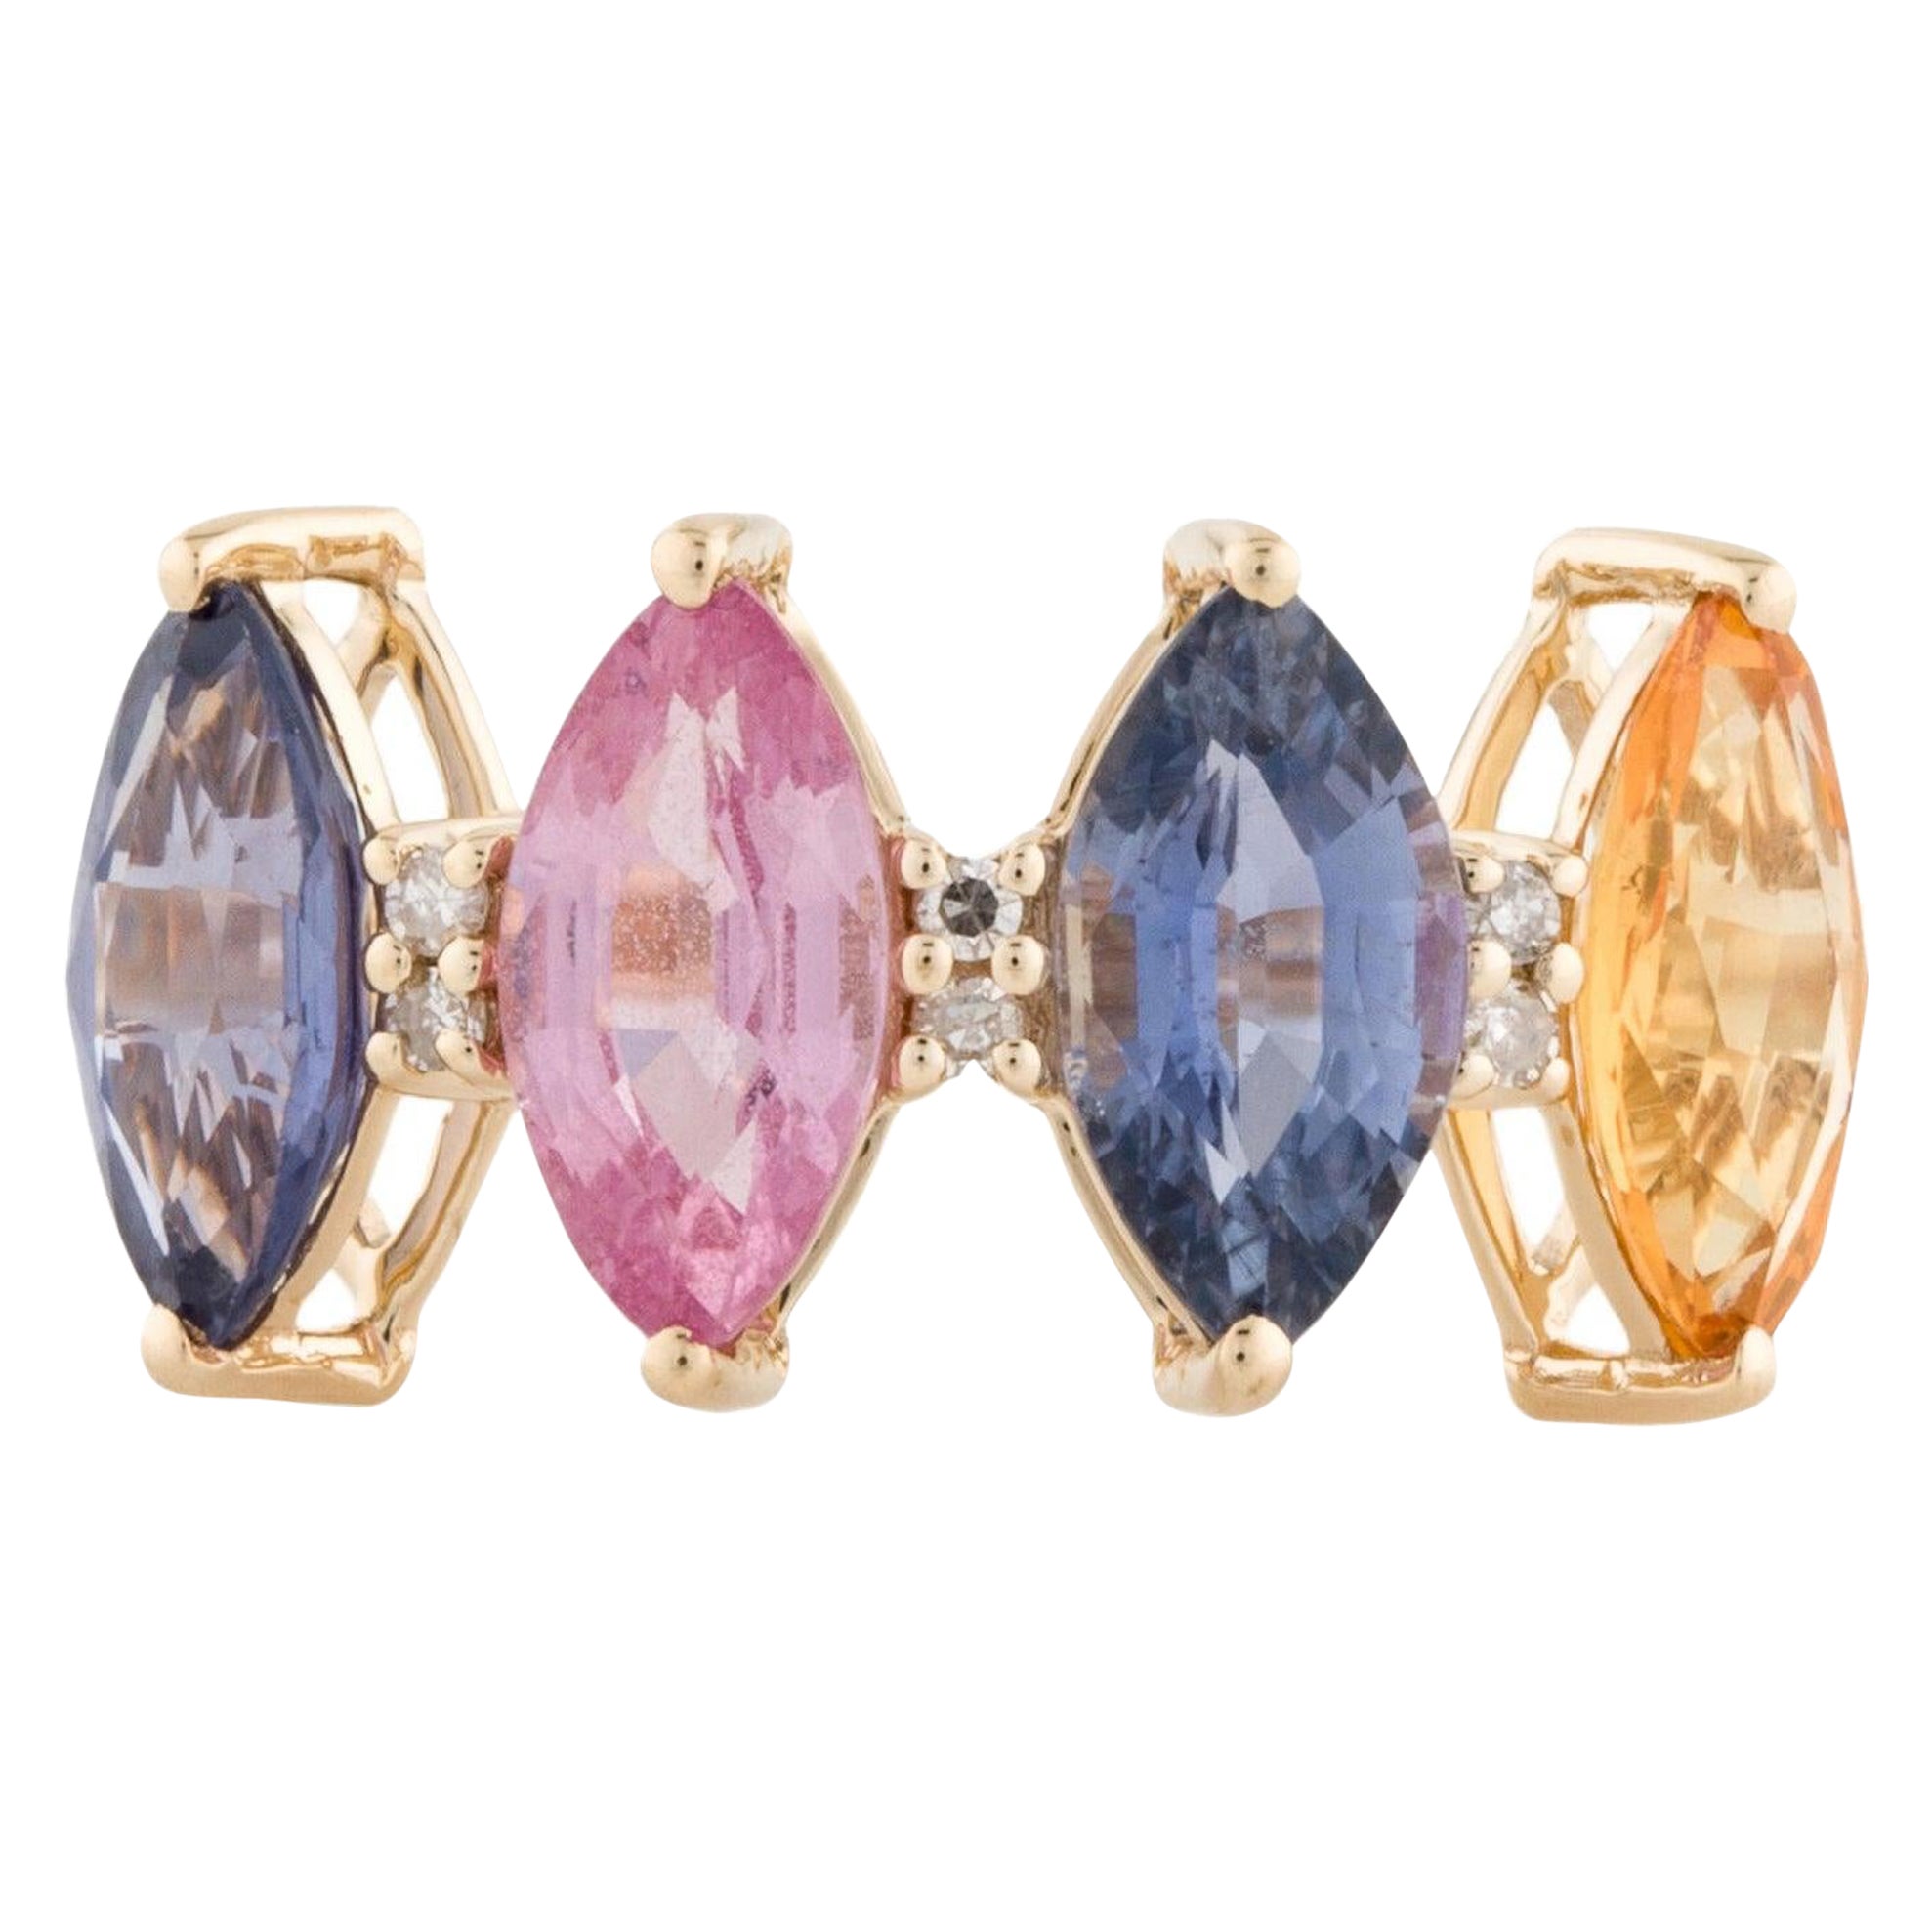 Luxury 14K Sapphire & Diamond Cocktail Ring, 3.45ctw, Size 7 - Statement Jewelry